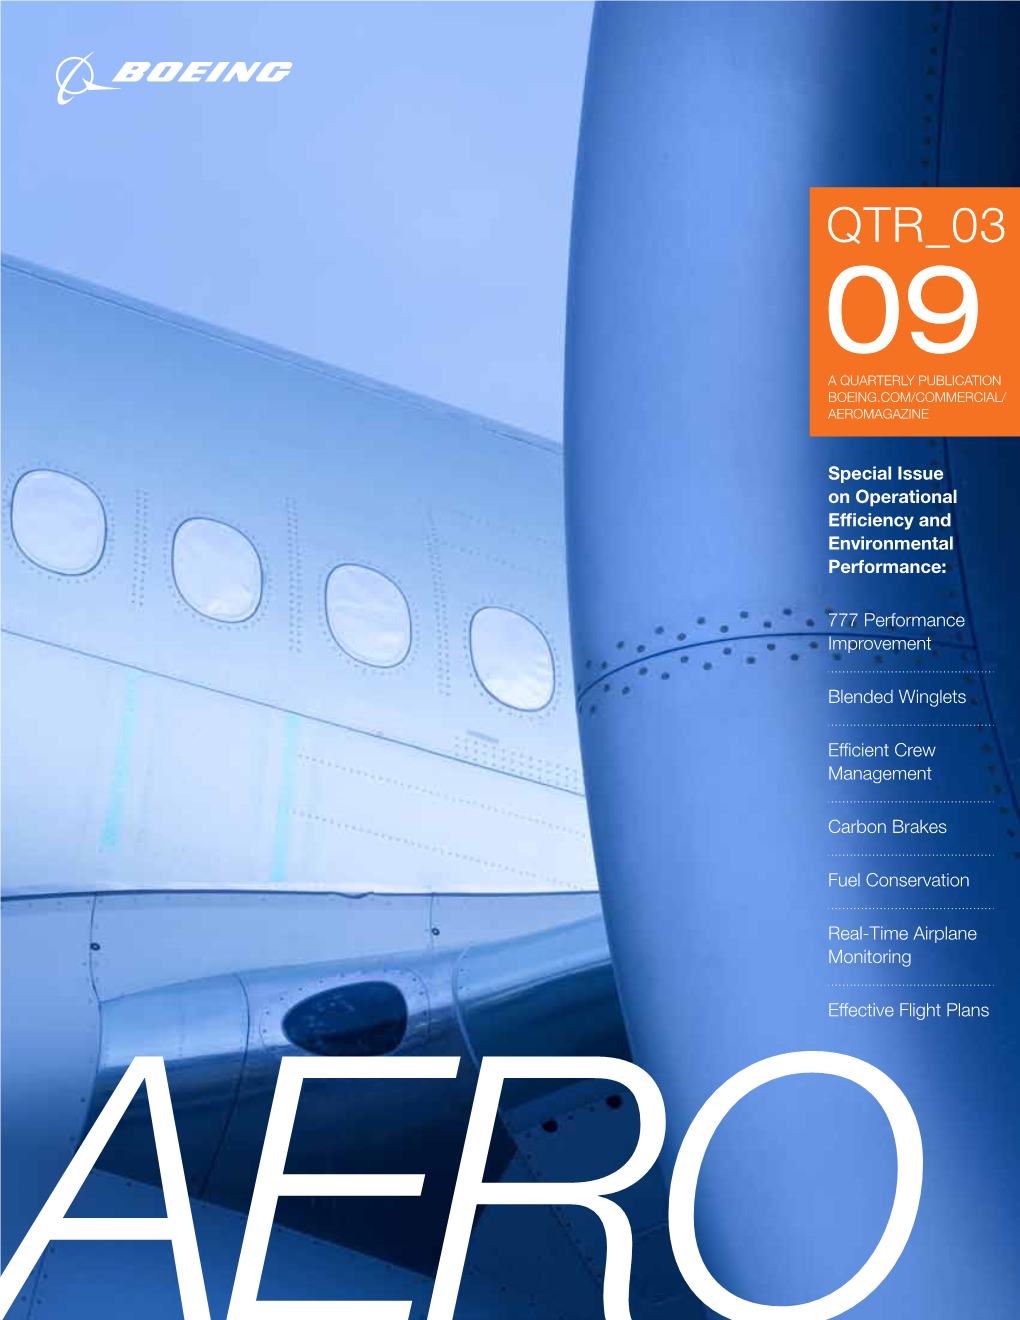 Qtr 03 09 a Quarterly Publication Boeing.Com/Commercial/ Aeromagazine